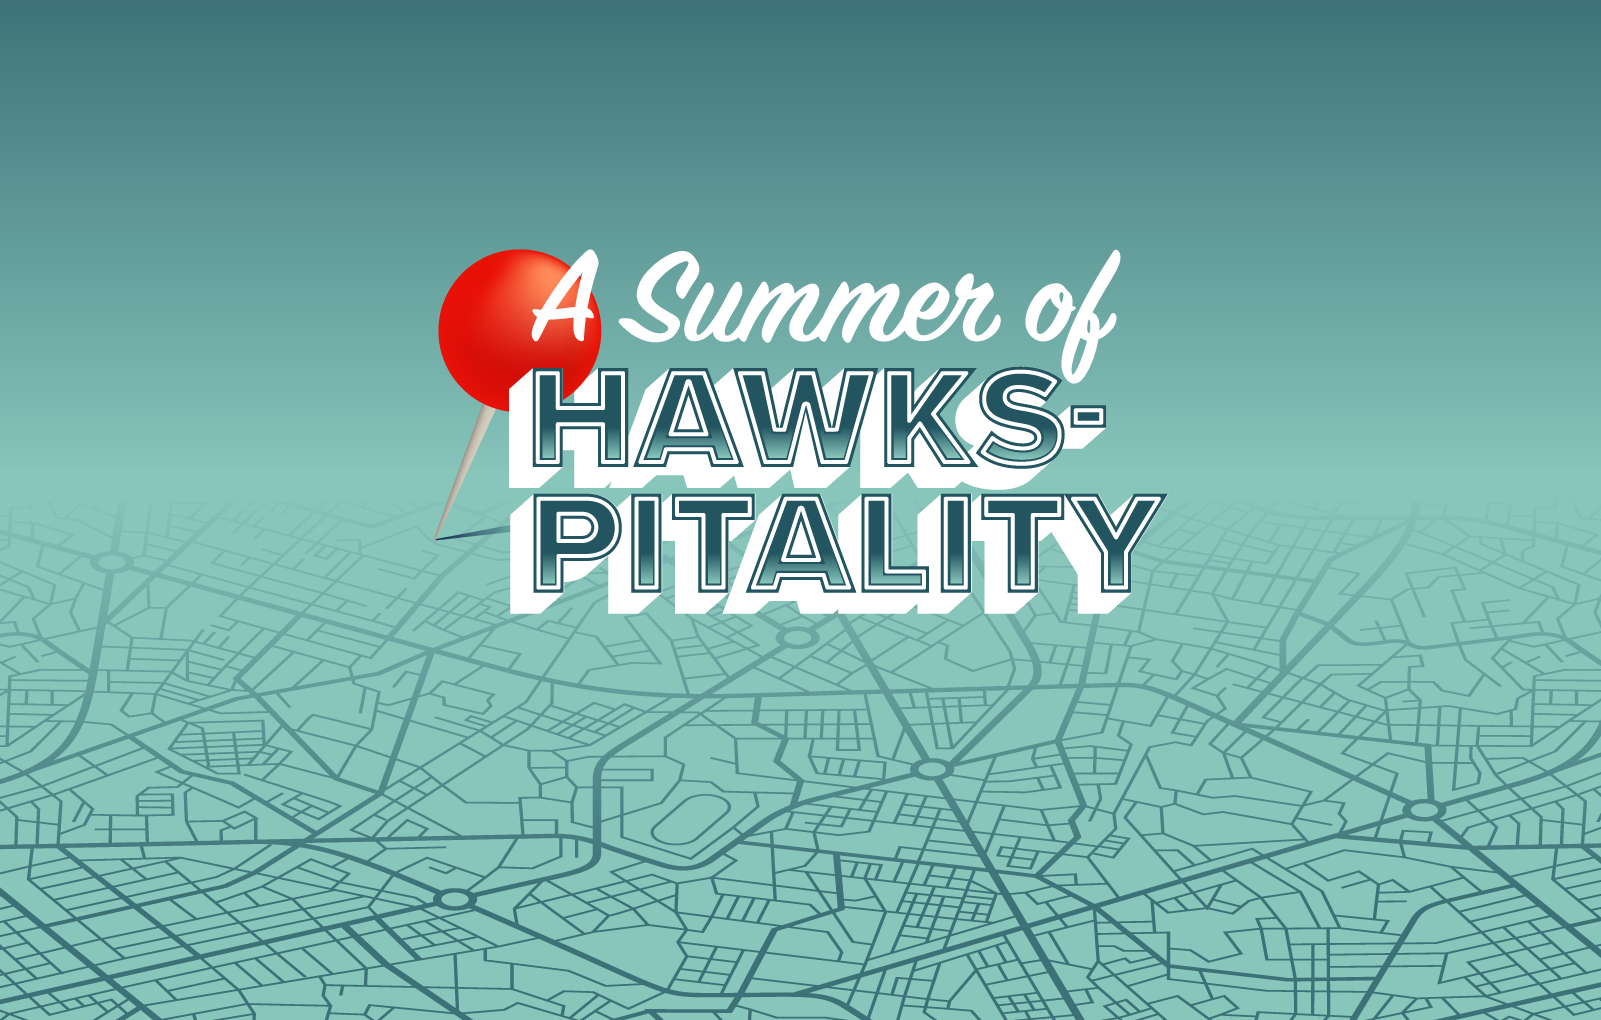 A Summer of Haks-pitality